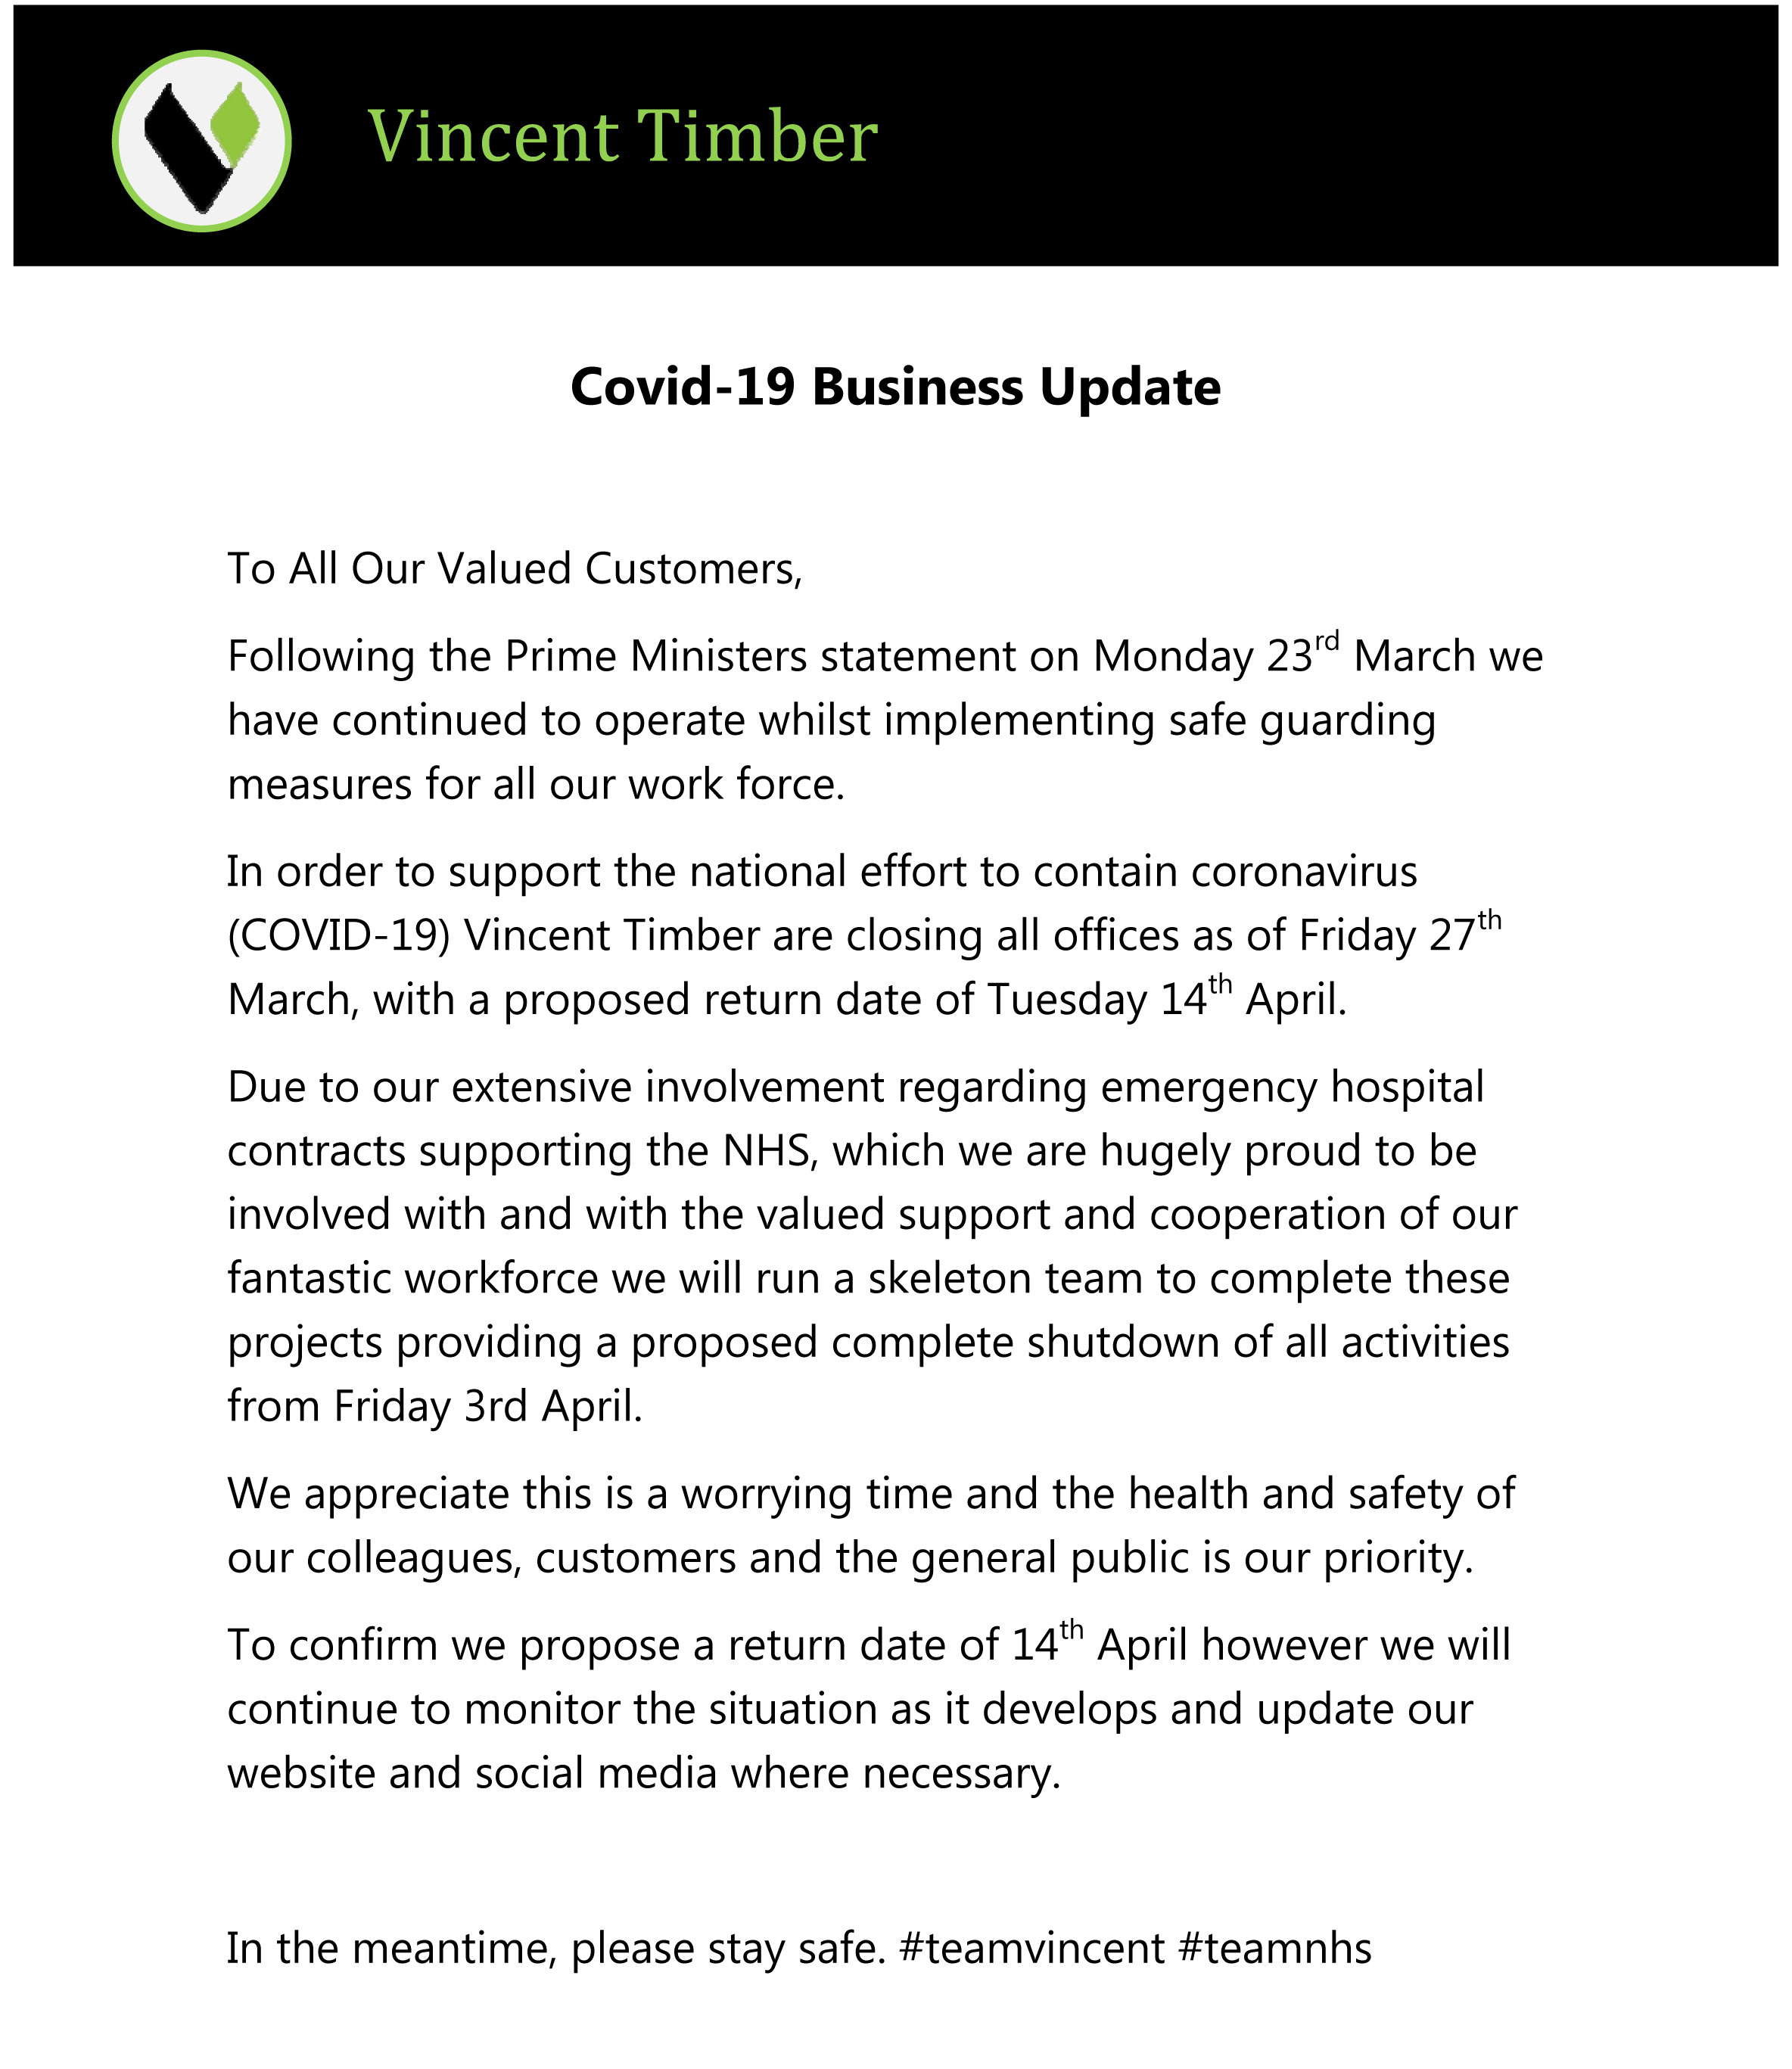 Covid-19 Business update